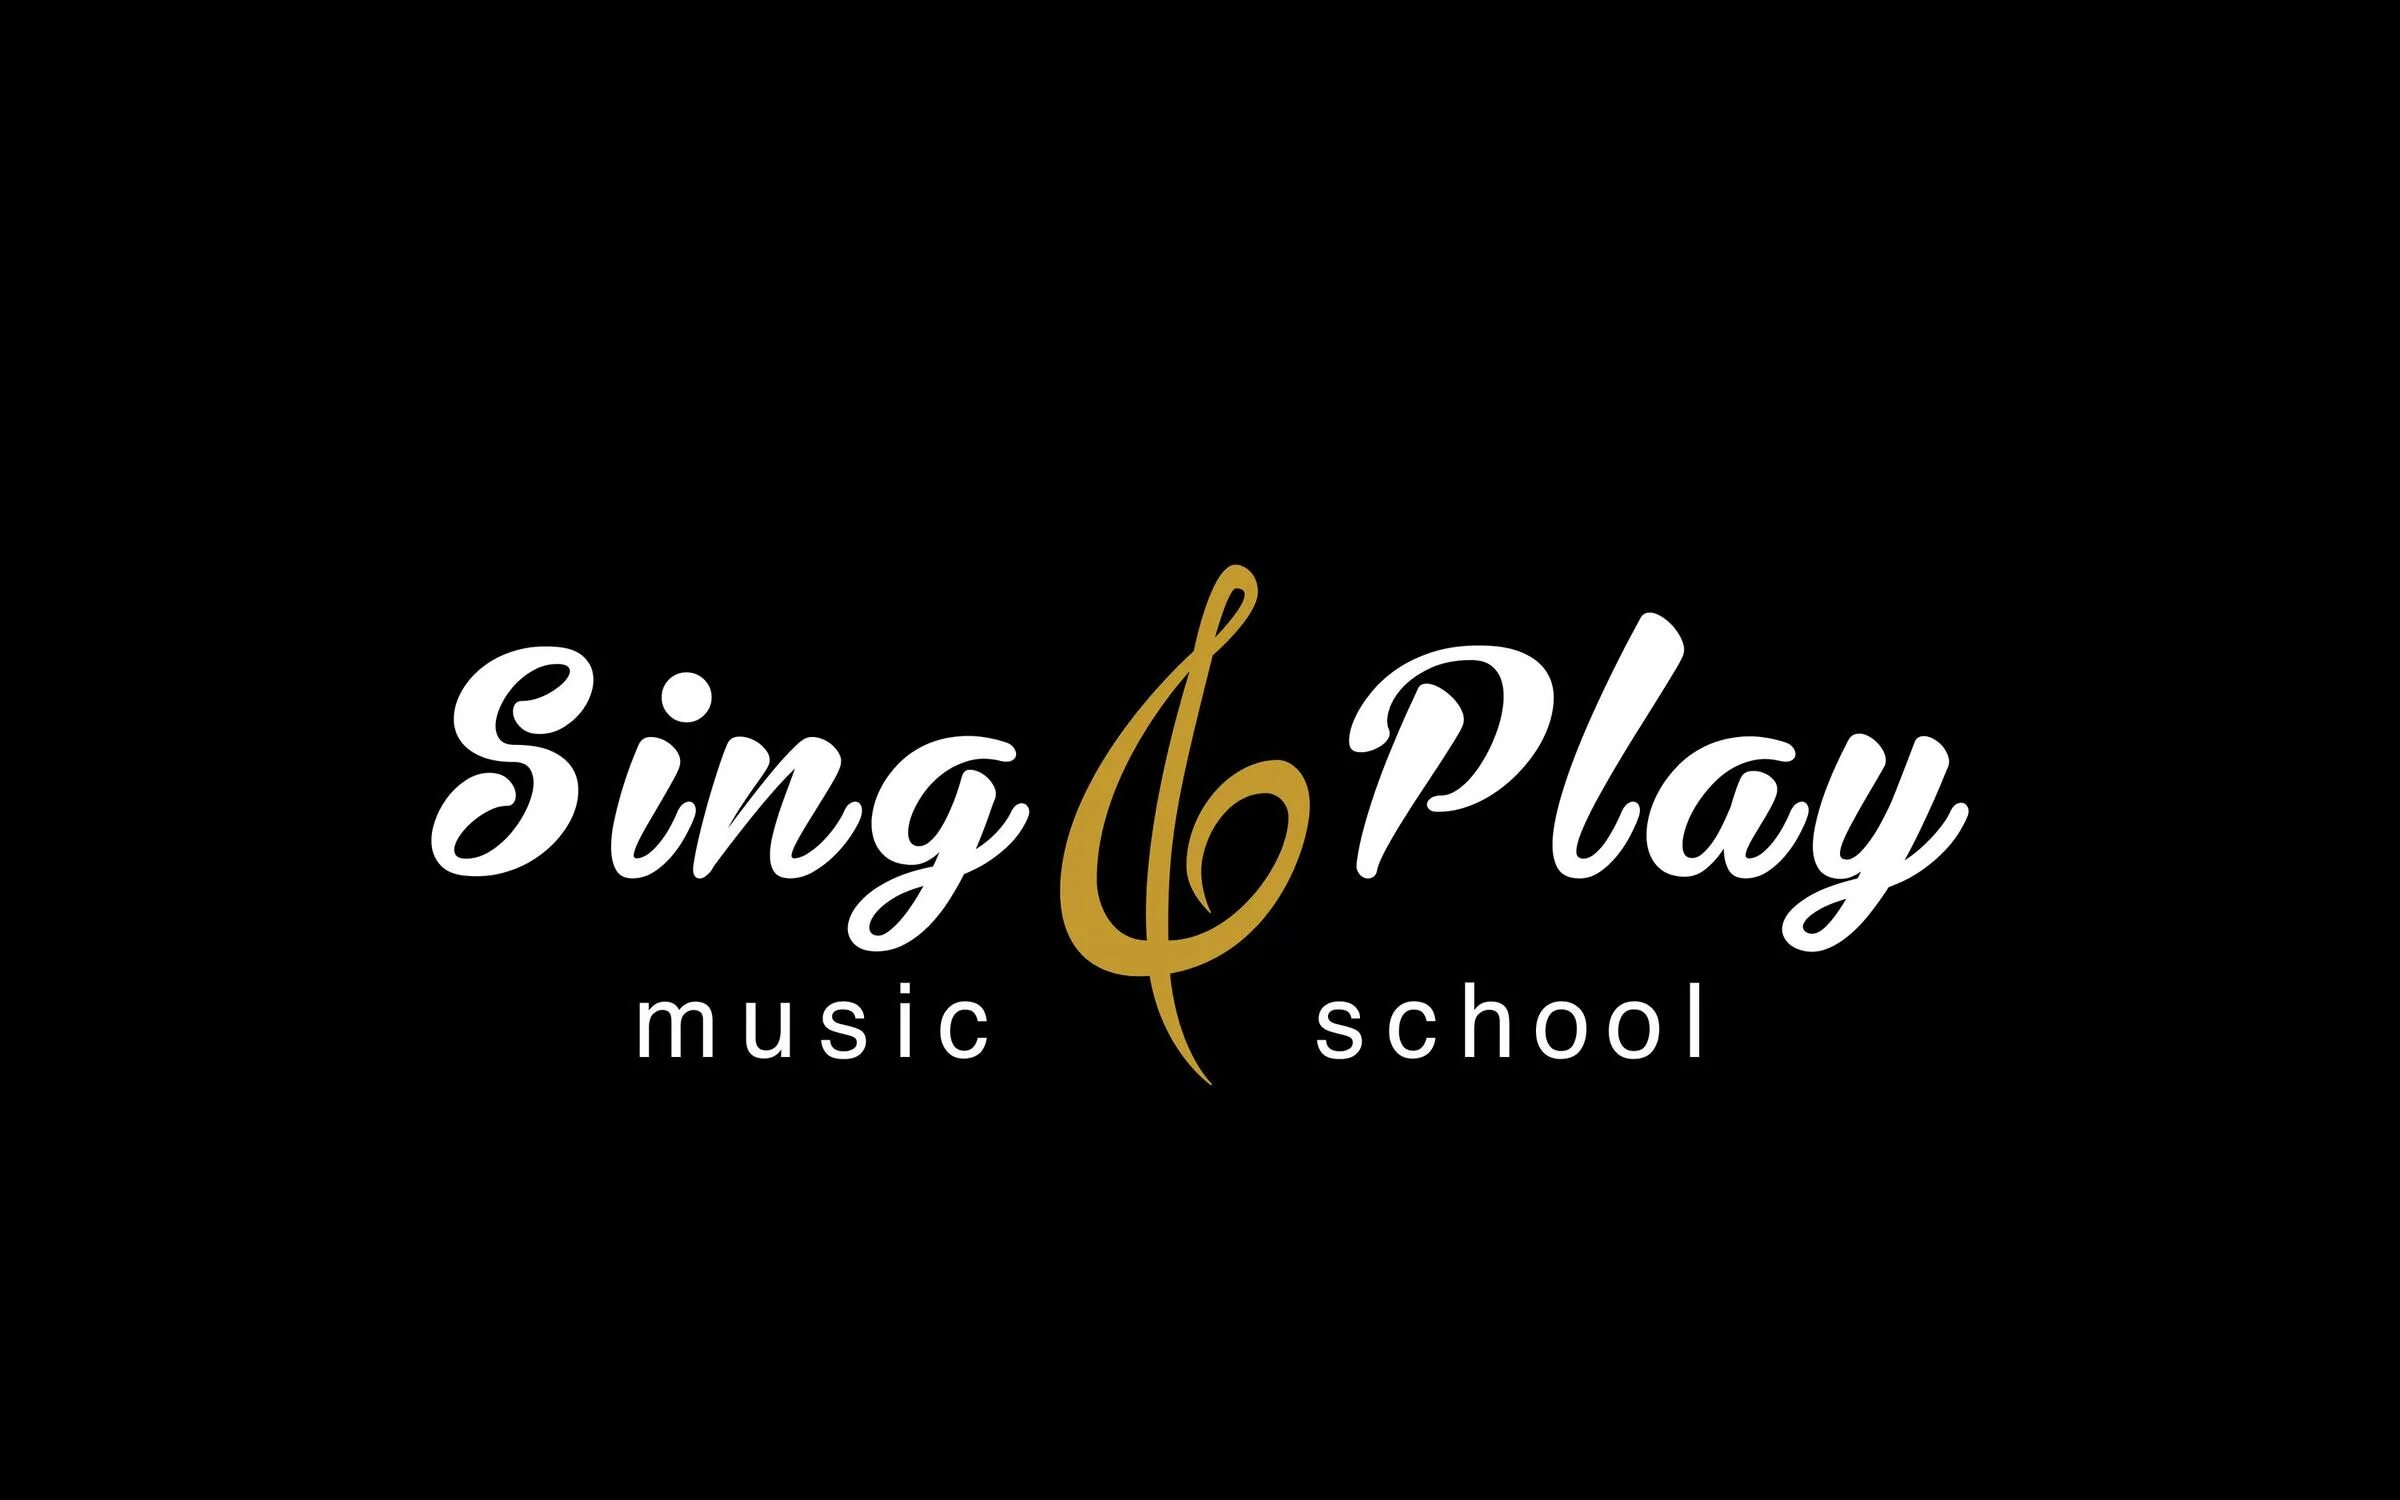 Sing and play 3. Play and Sing. Sing Play APK. School Sing Sing. Sing logo.